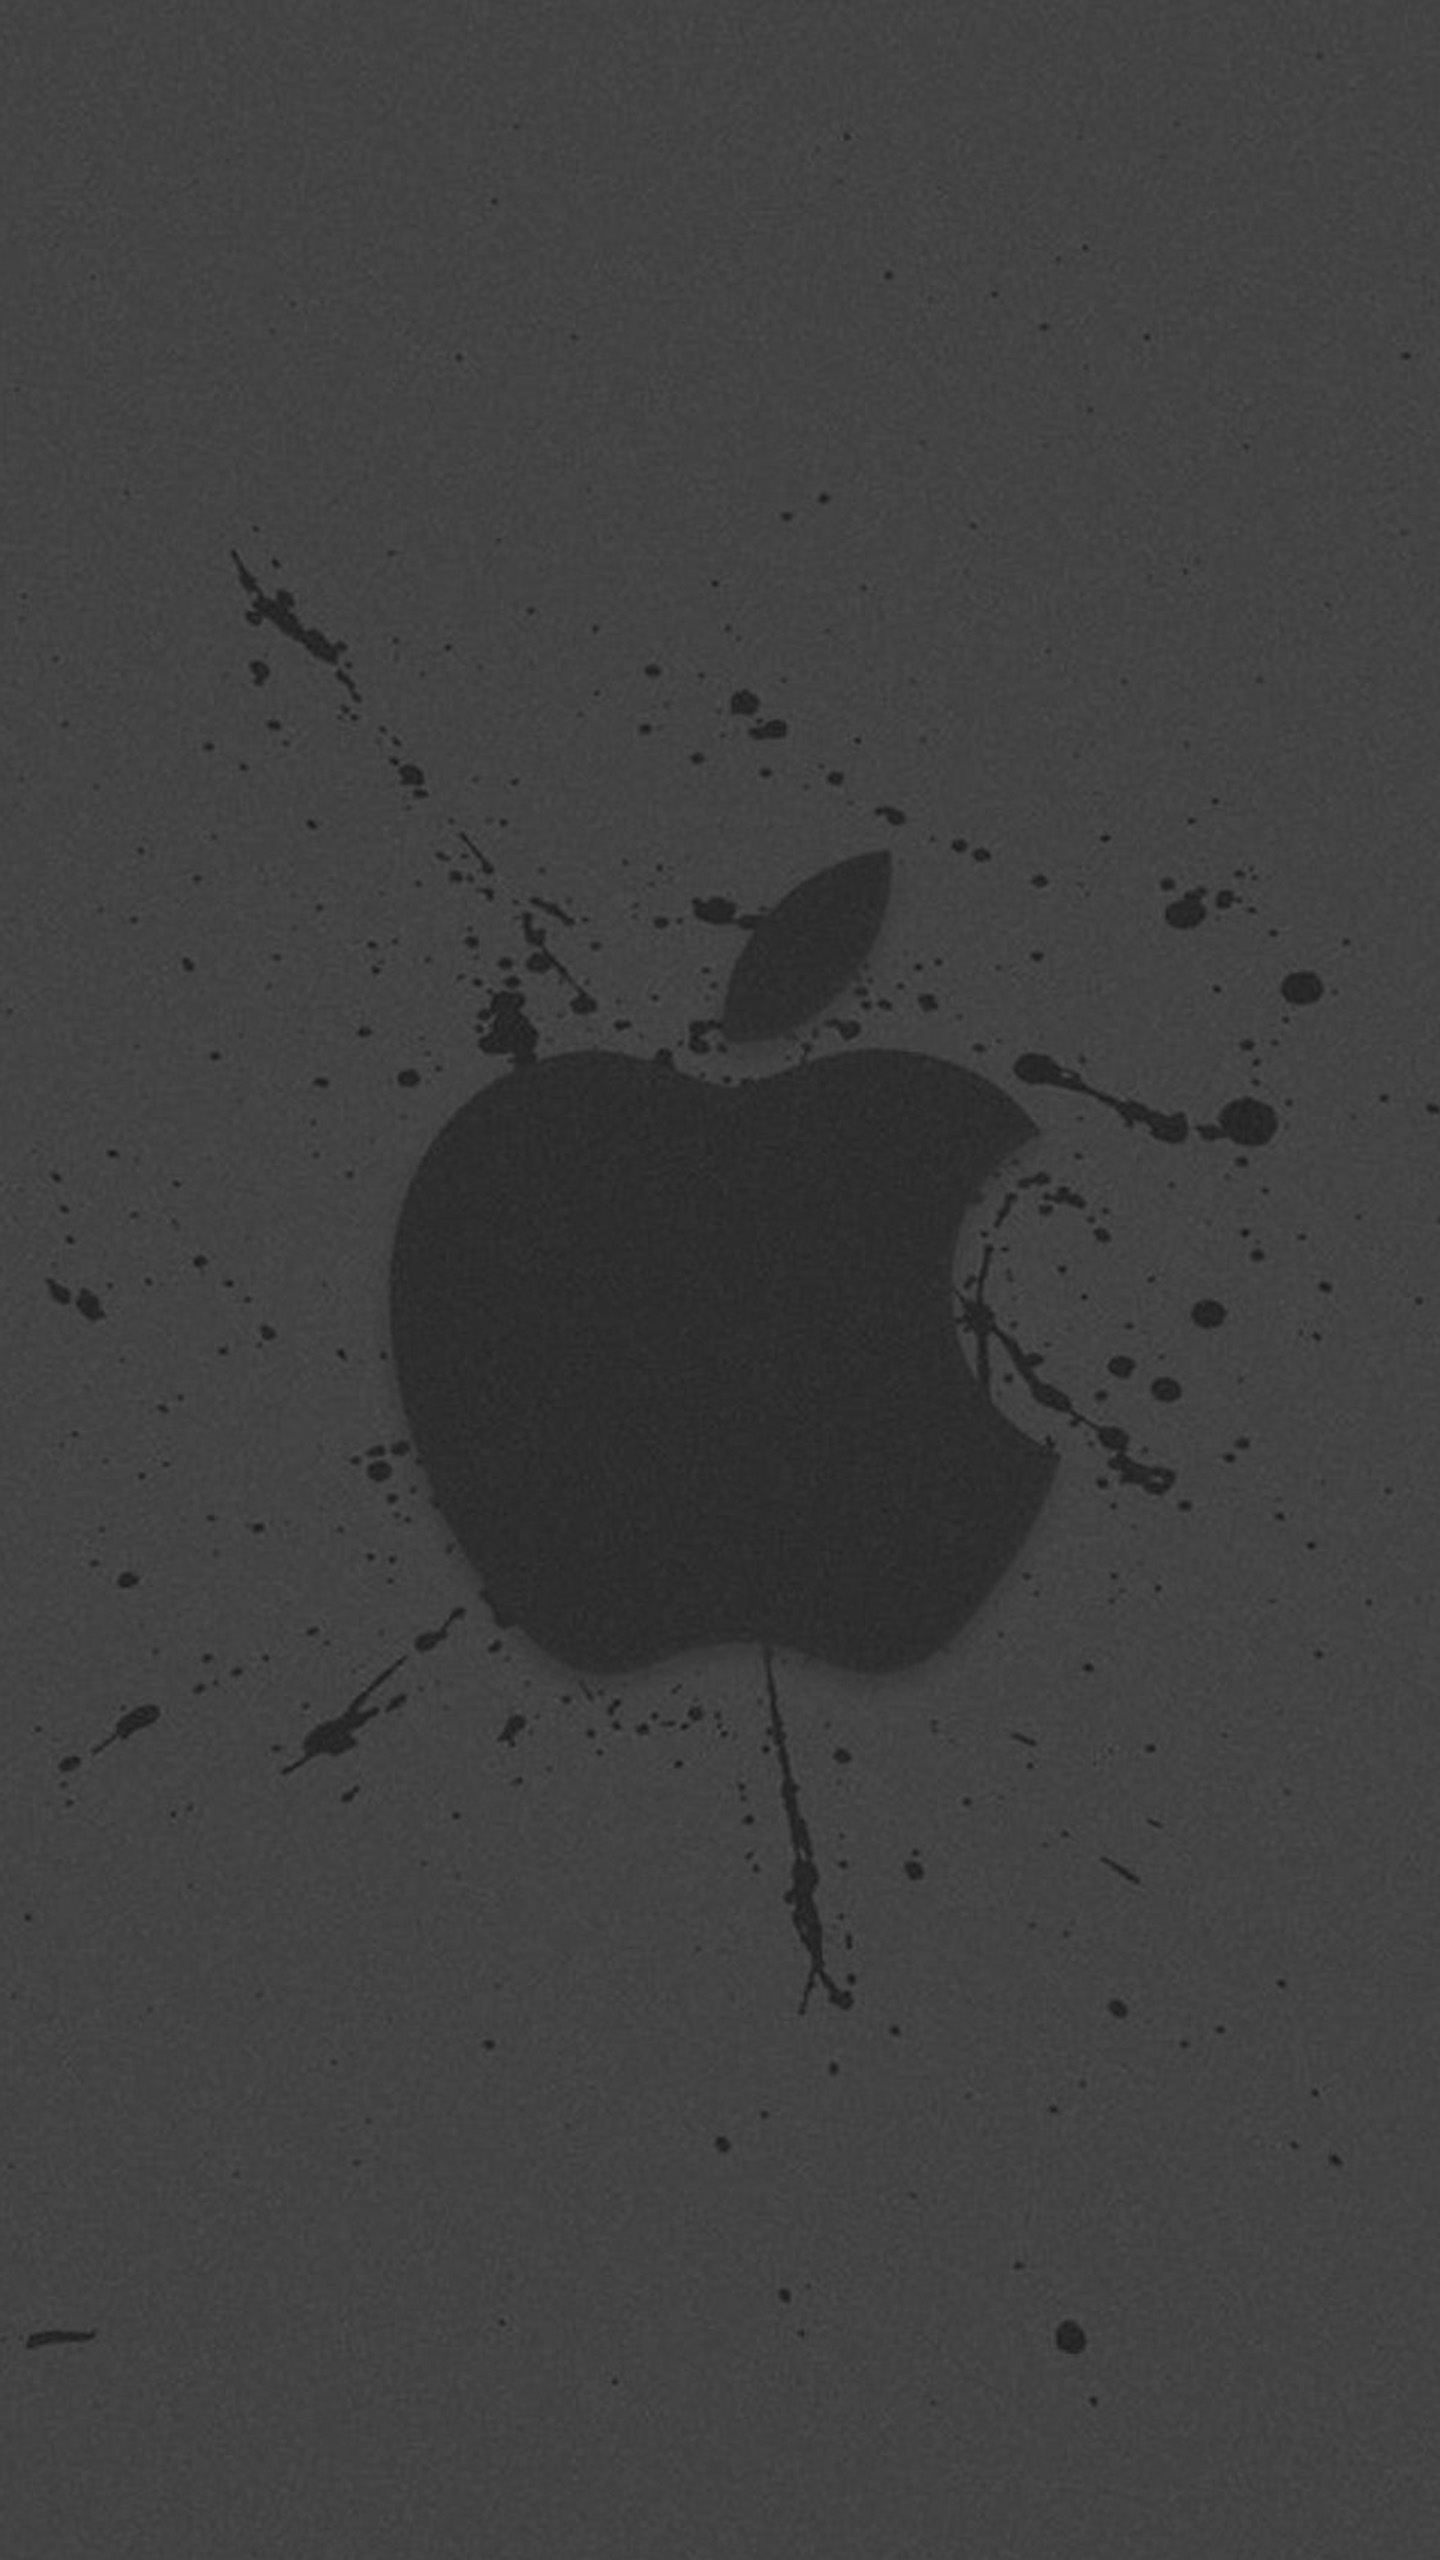 Black Apple logo 3 Galaxy S6 Wallpaper | Galaxy S6 Wallpapers